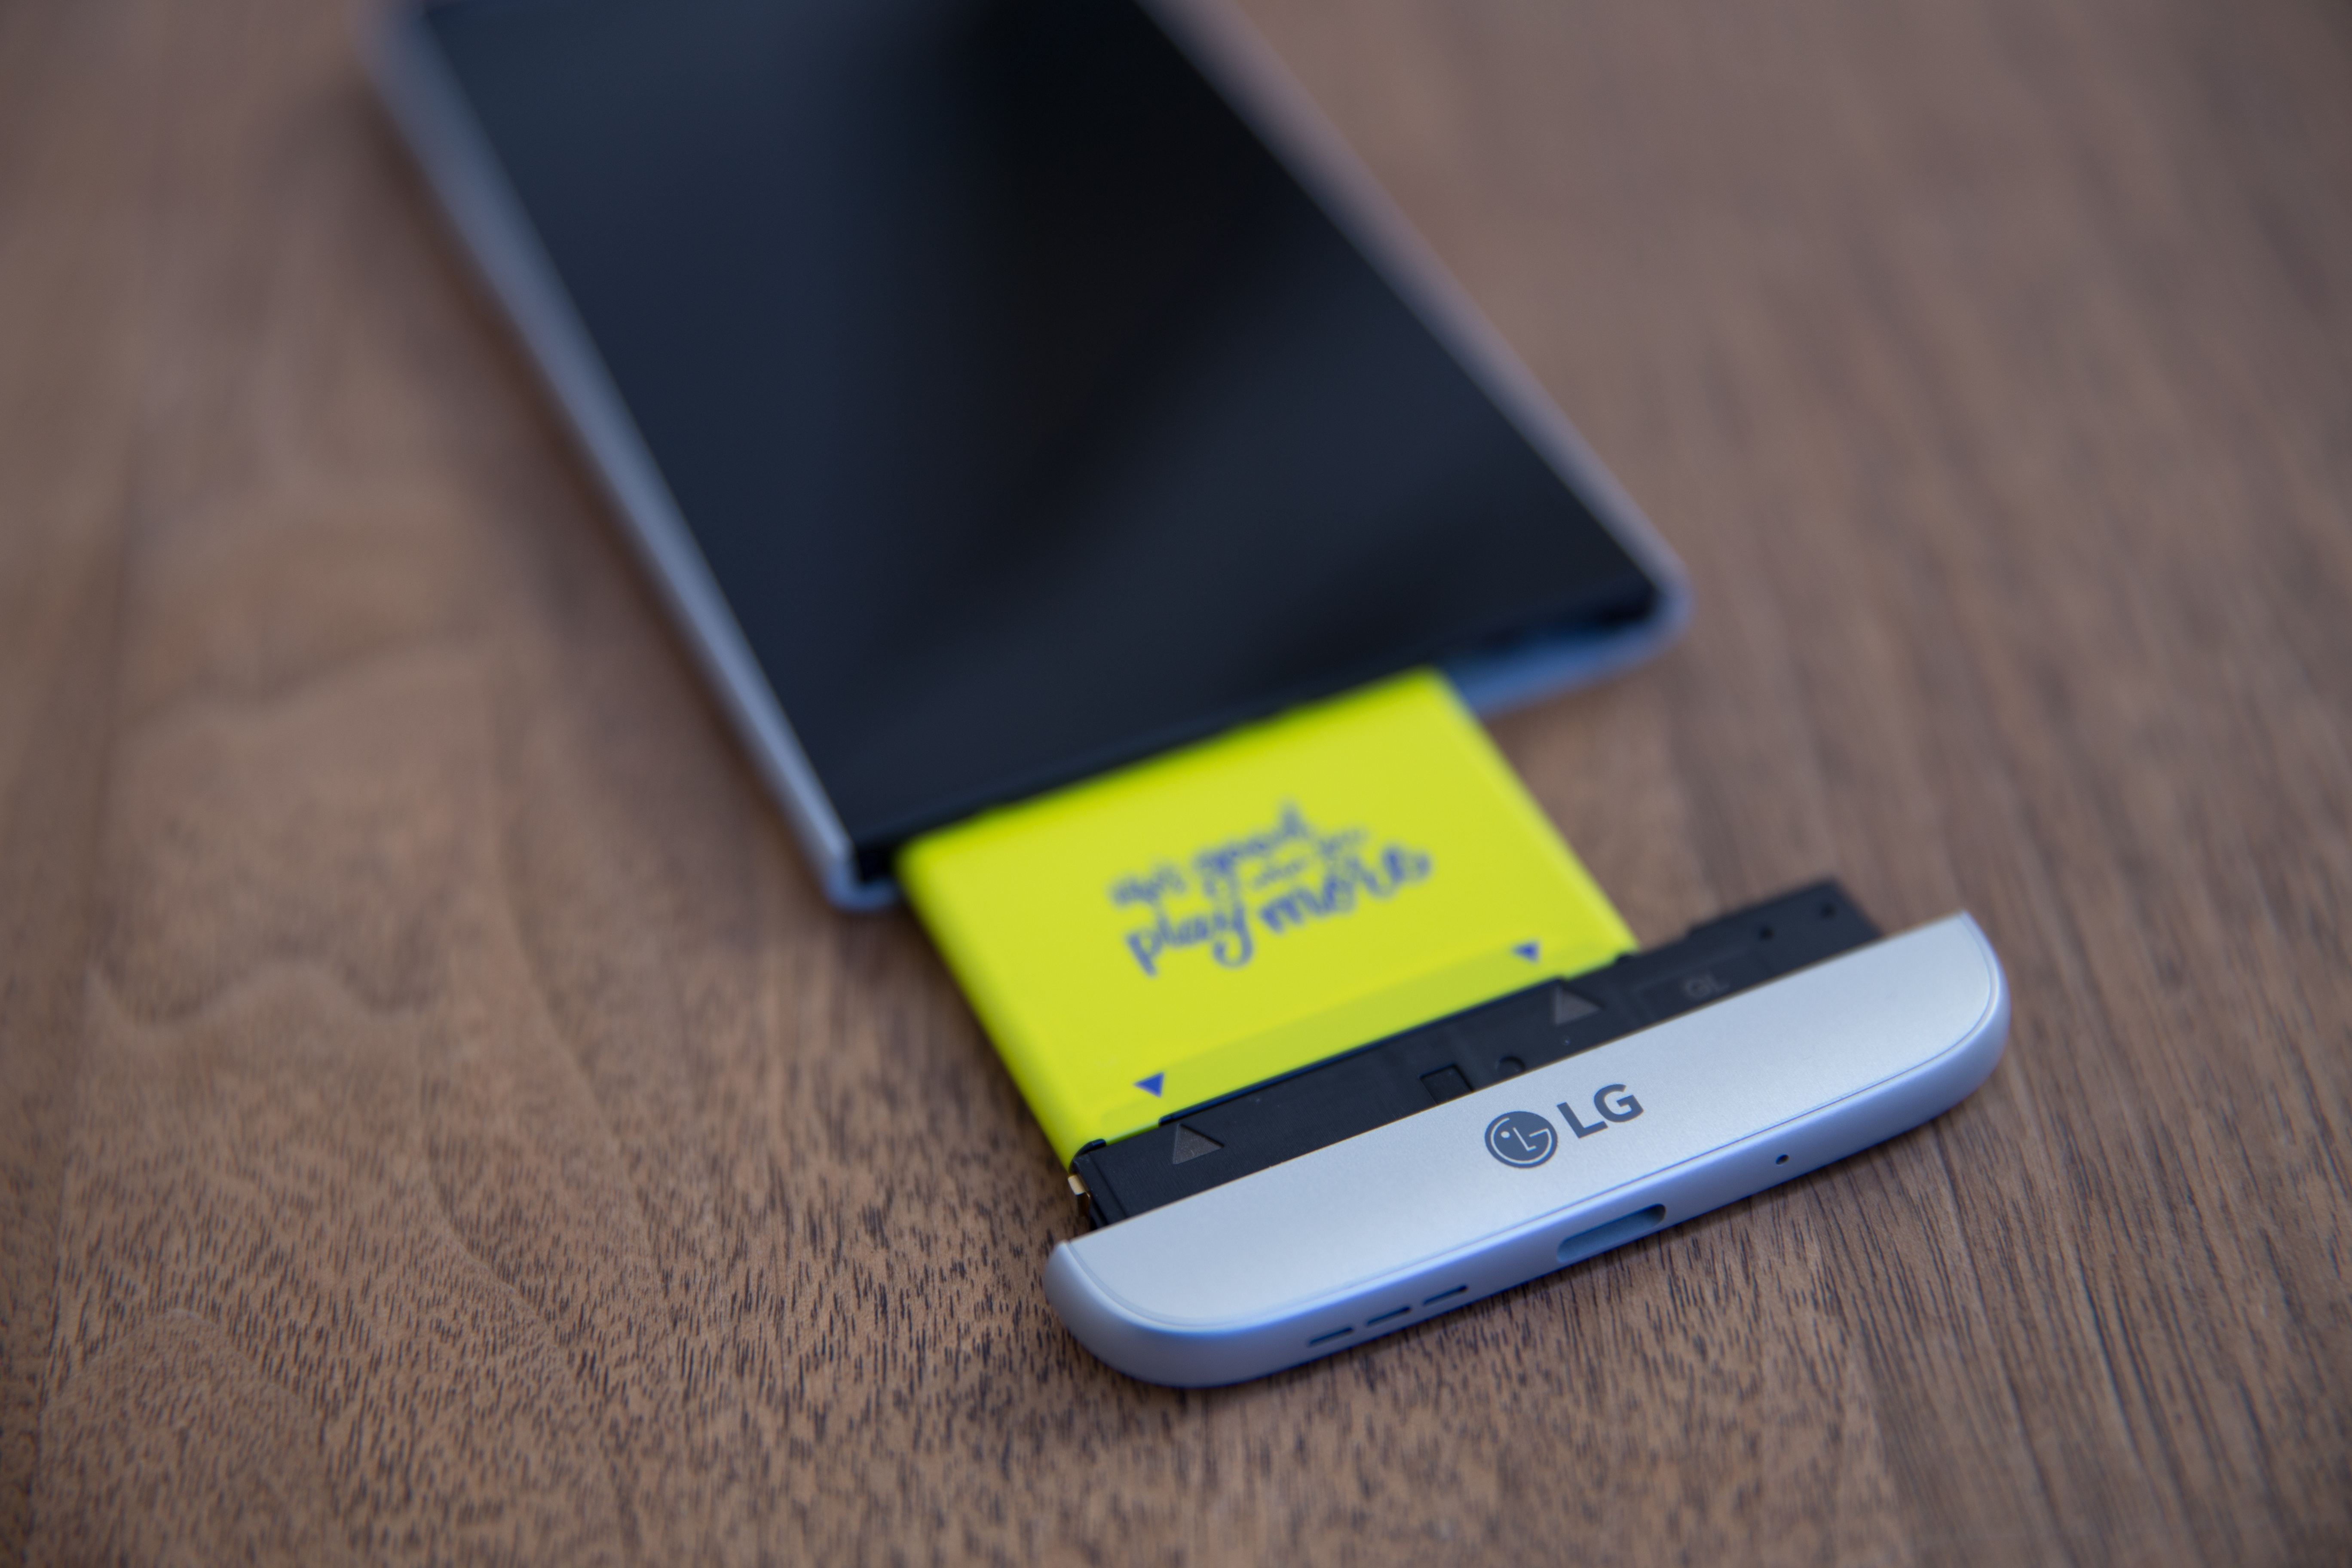 Every Angle Of The Modular LG G5 Smartphone | TechCrunch